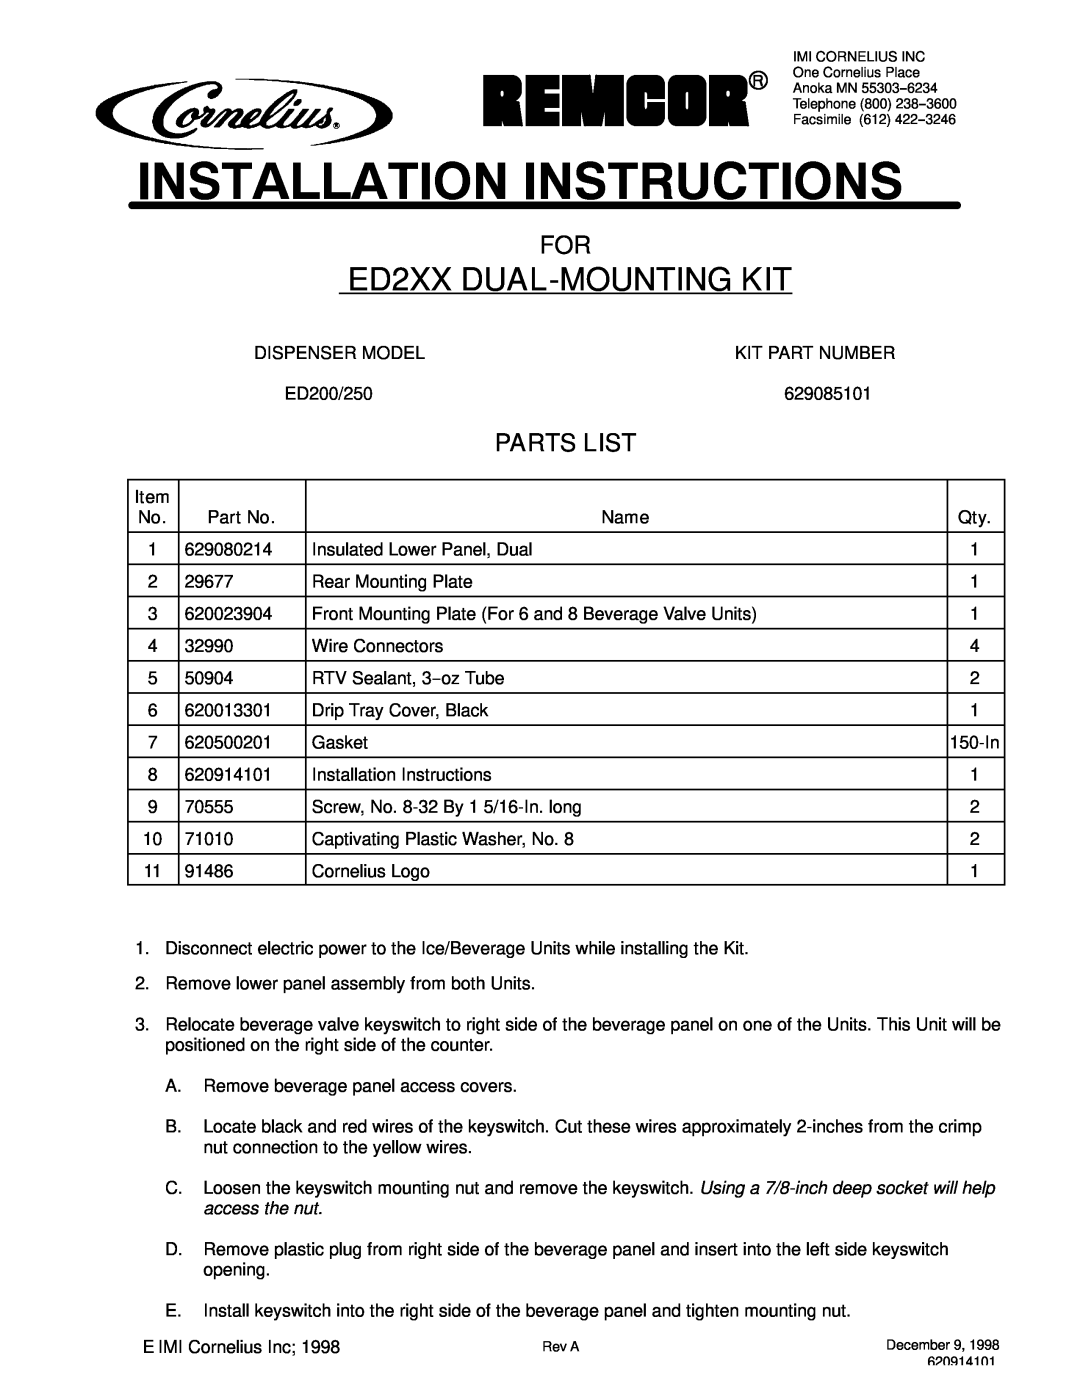 Cornelius 629080214, 629085101, 29677 installation instructions Name, ED2XX DUAL-MOUNTINGKIT, Parts List 